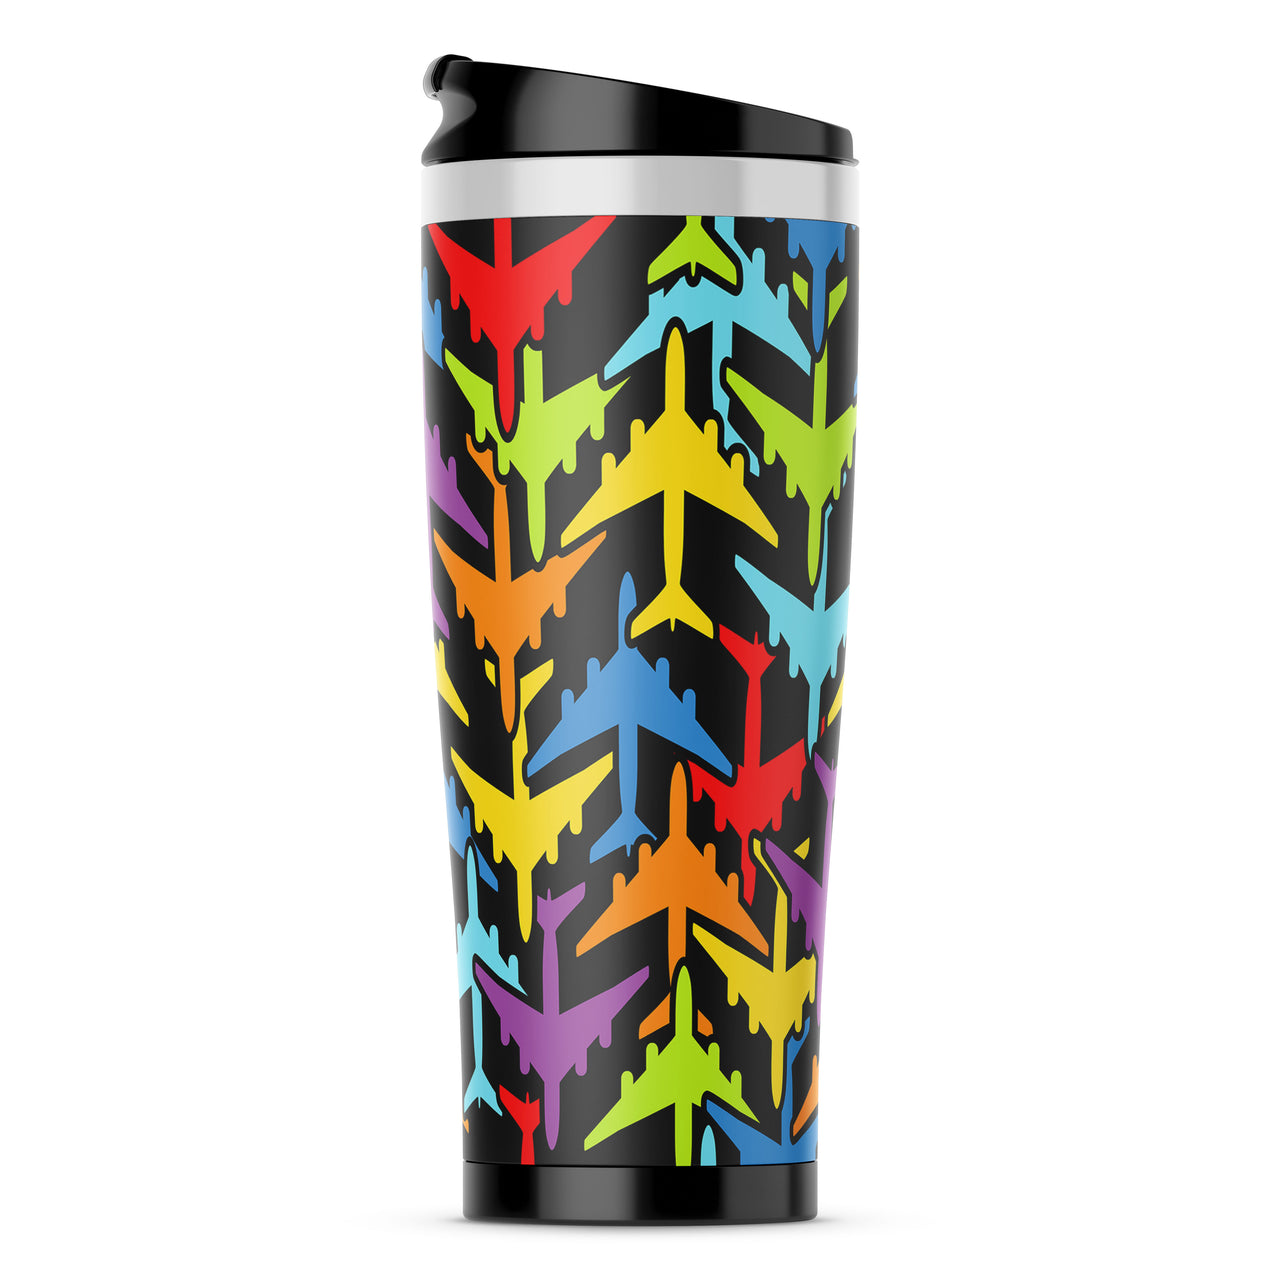 Super Colourful Airplanes Designed Travel Mugs